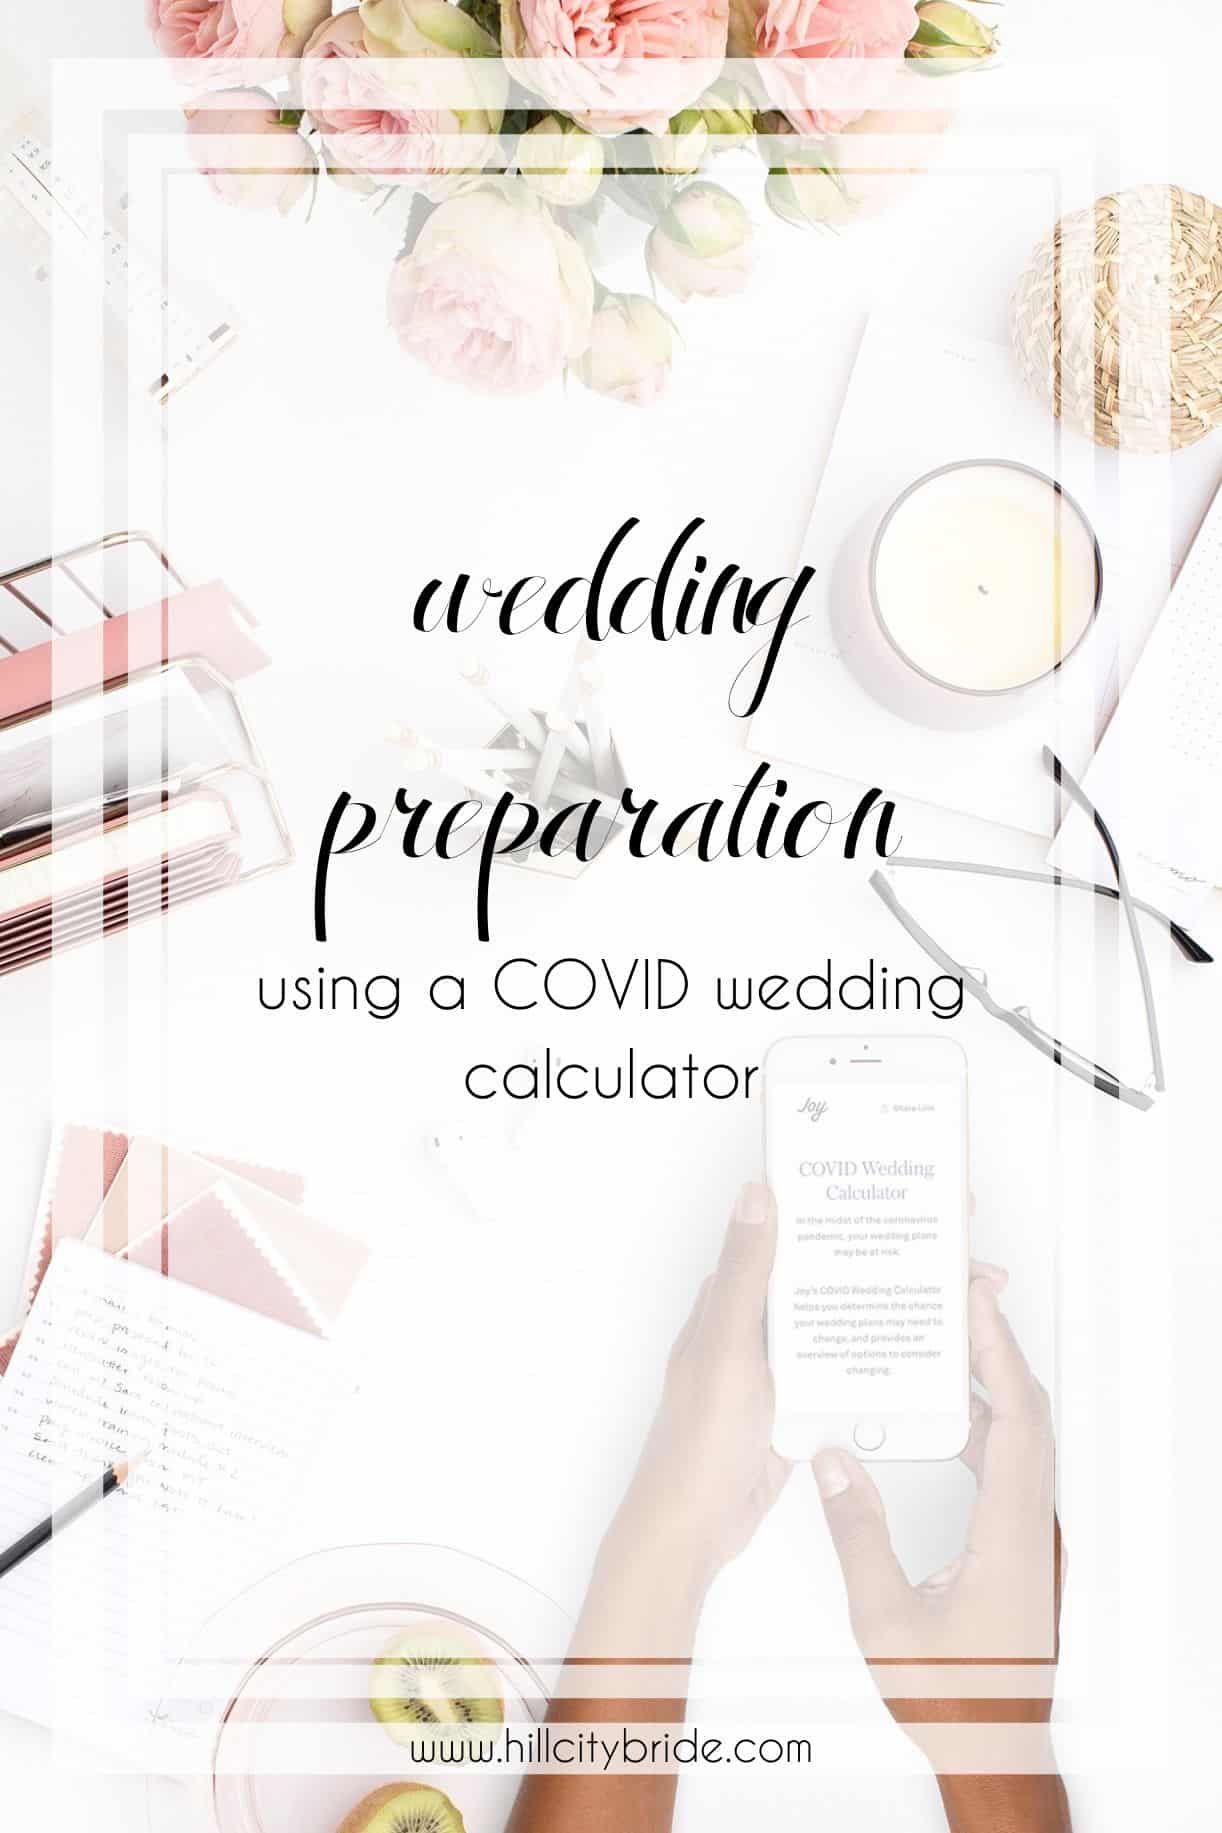 Wedding Preparation - Using a COVID Wedding Calculator | Hill City Bride Virginia Weddings